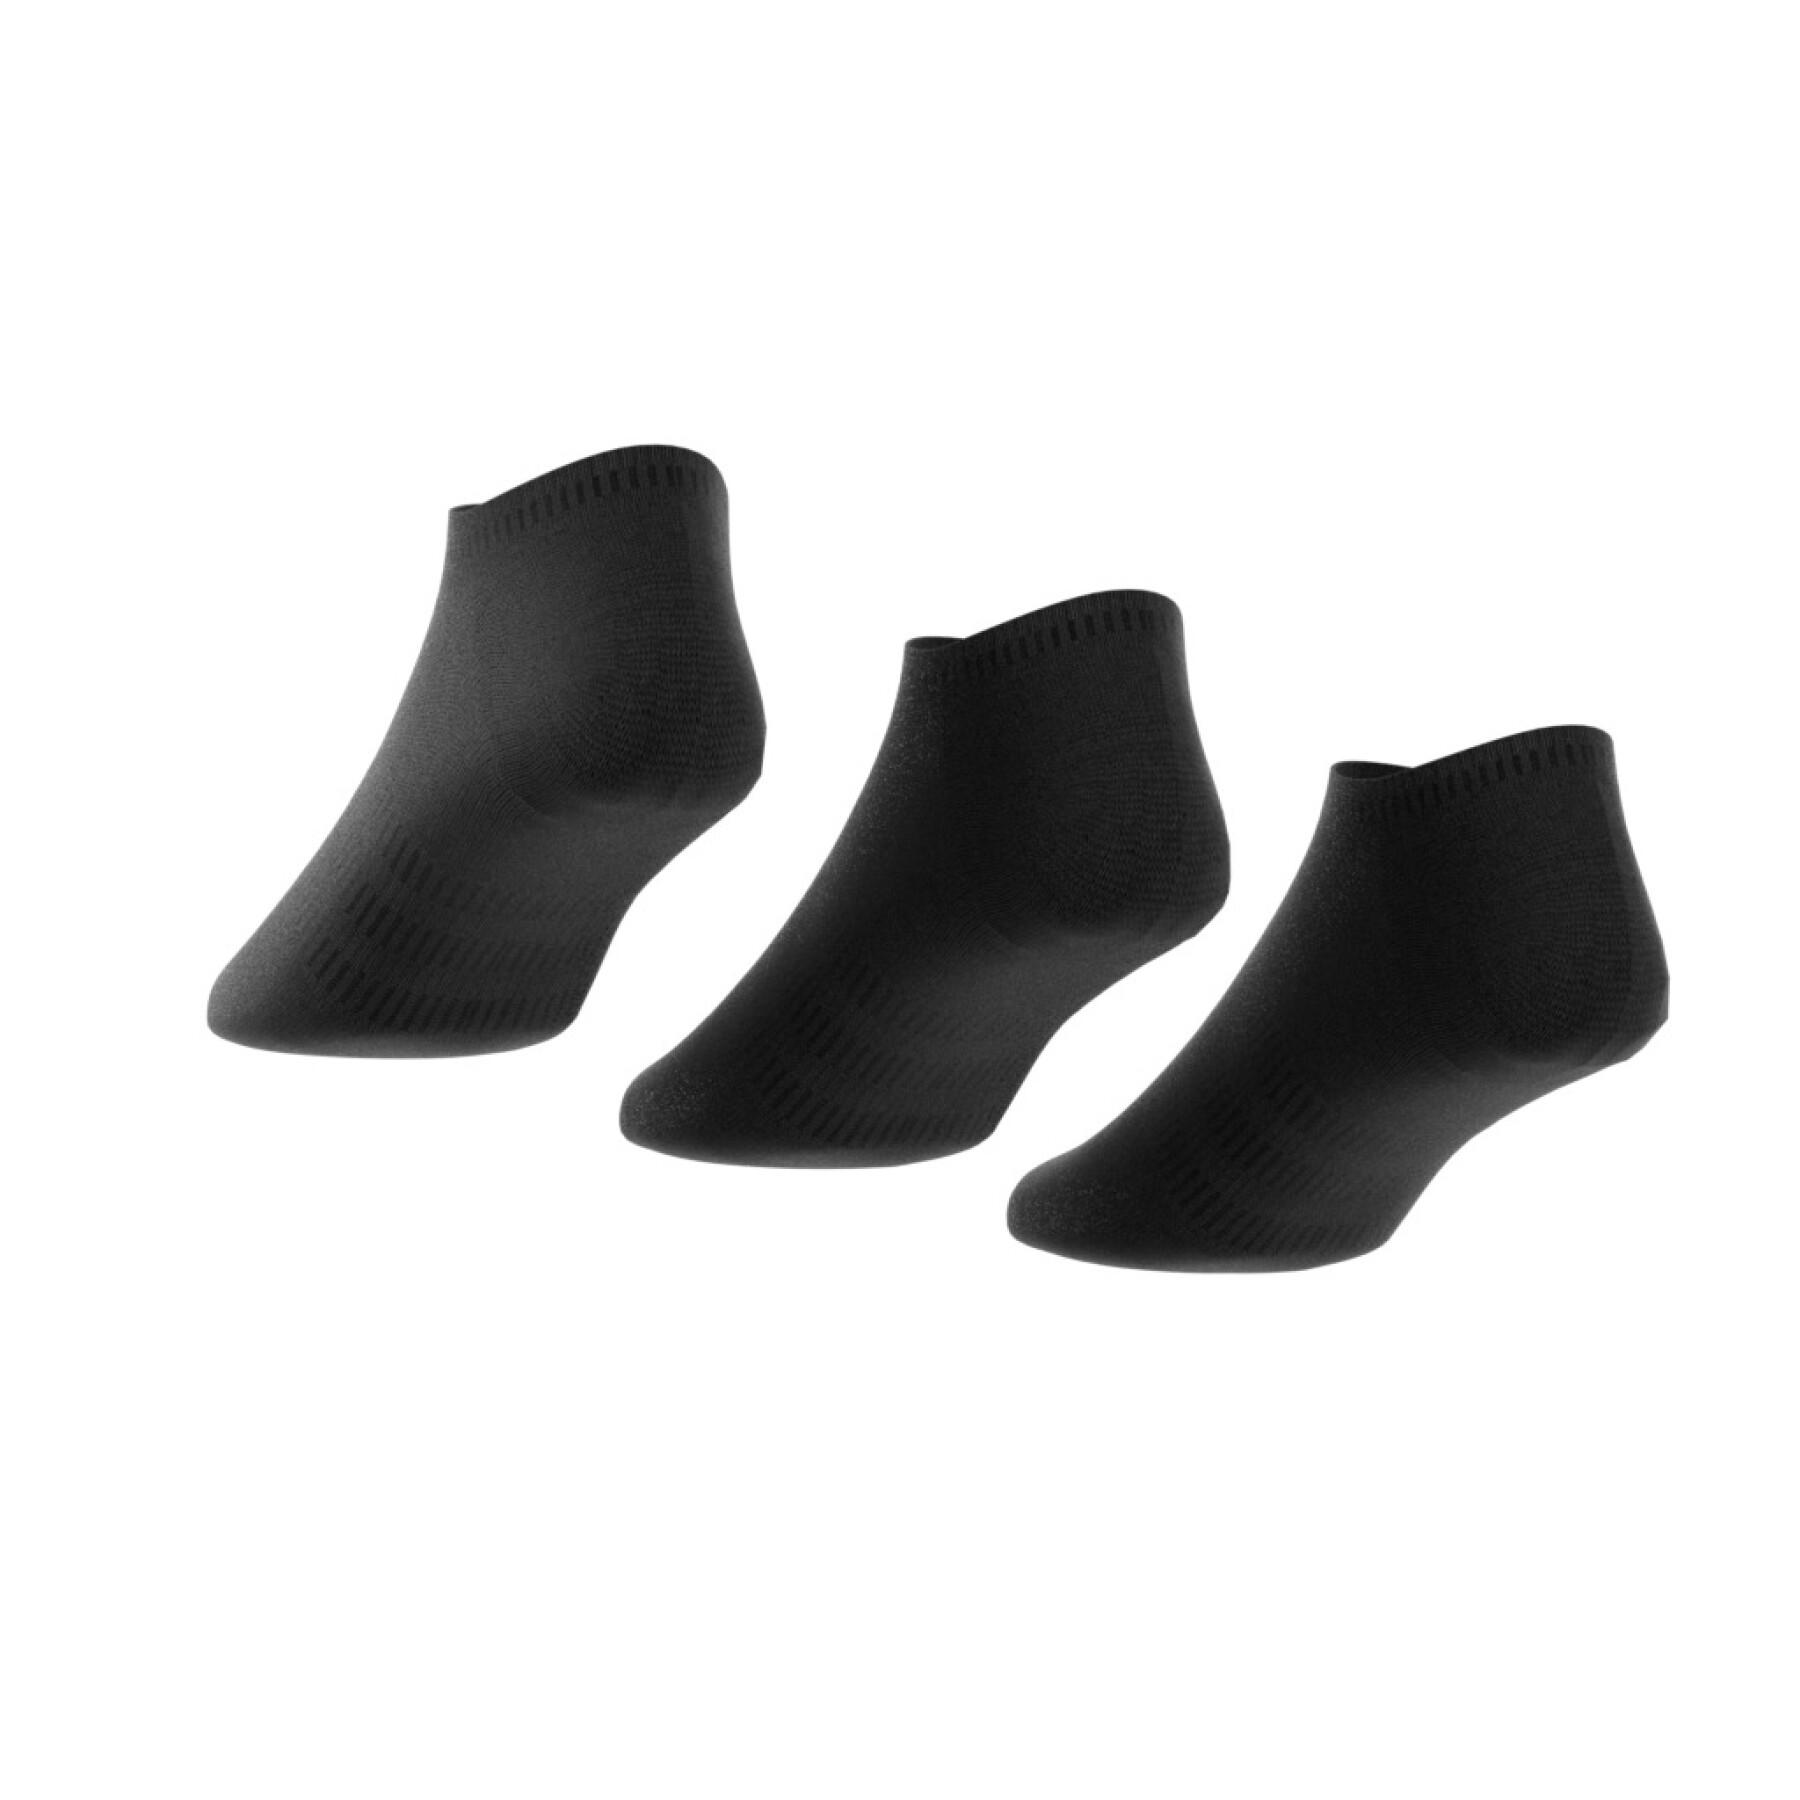 Children's invisible socks adidas Thin & Light (x3)